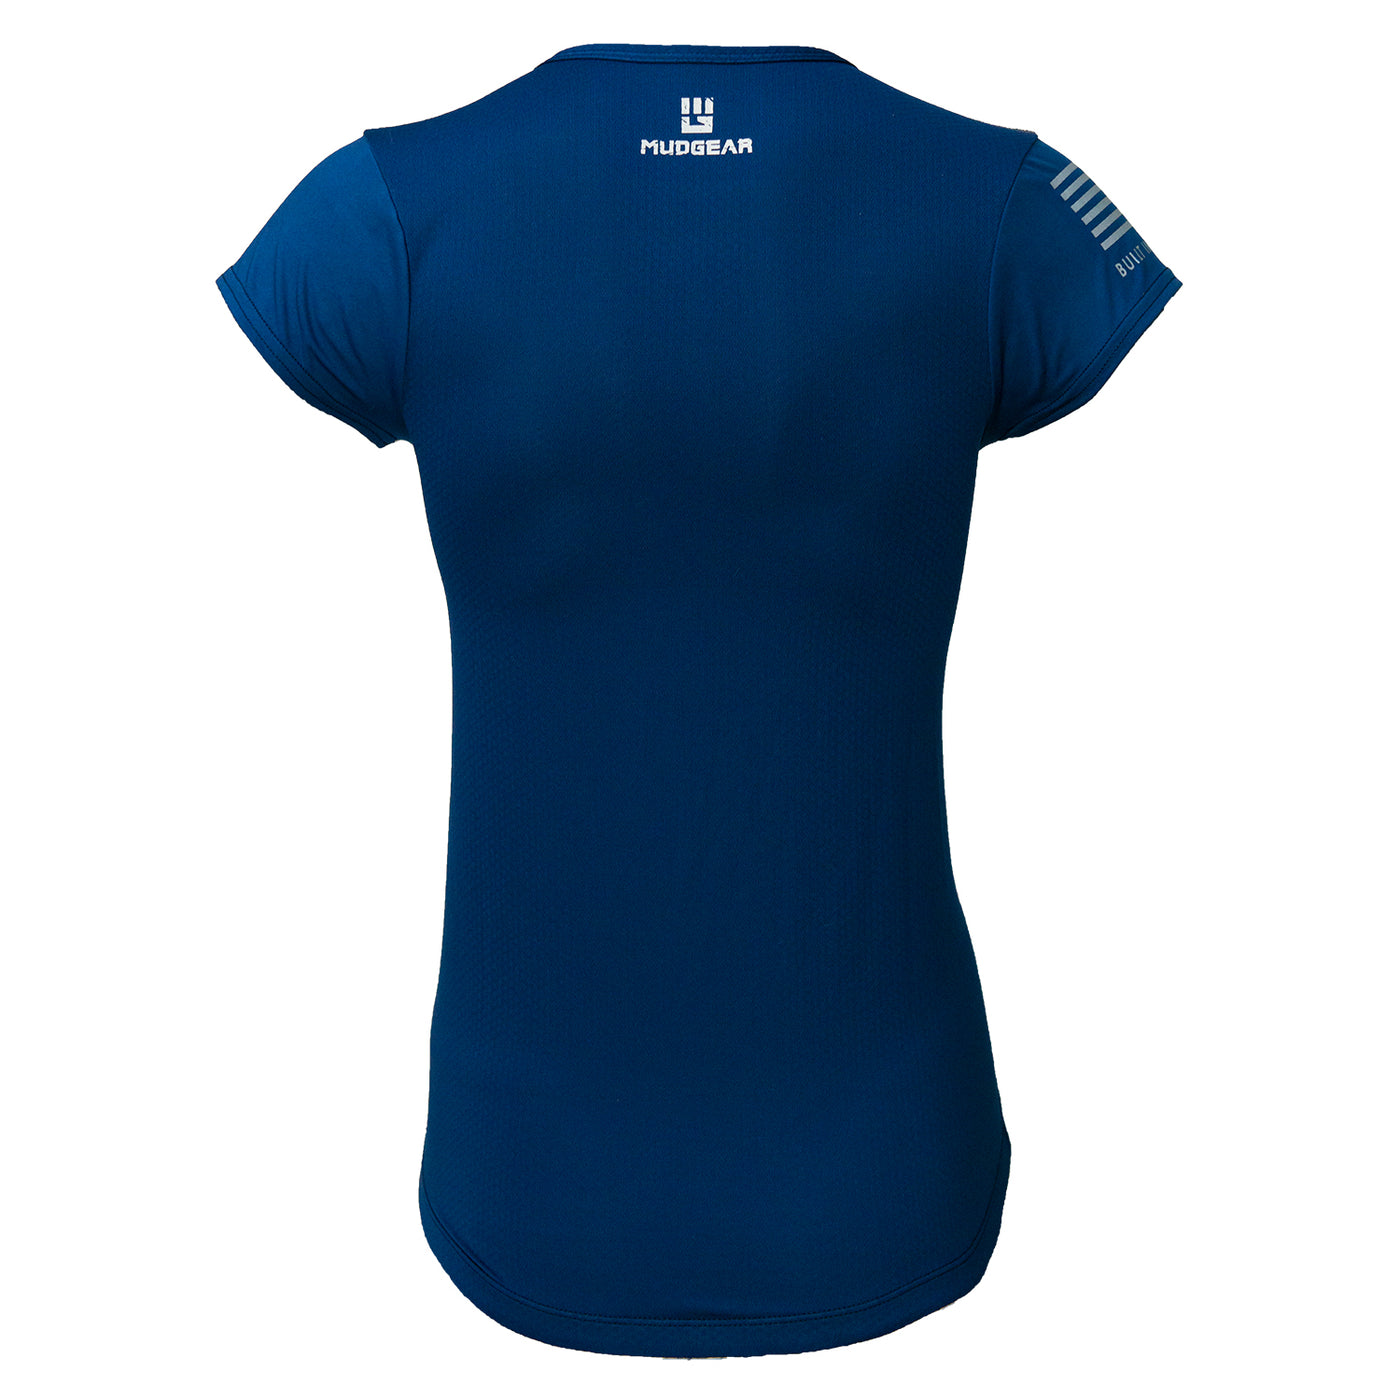 Mudgear Women’s Fitted Performance Shirt - Short Sleeve Back (Navy)